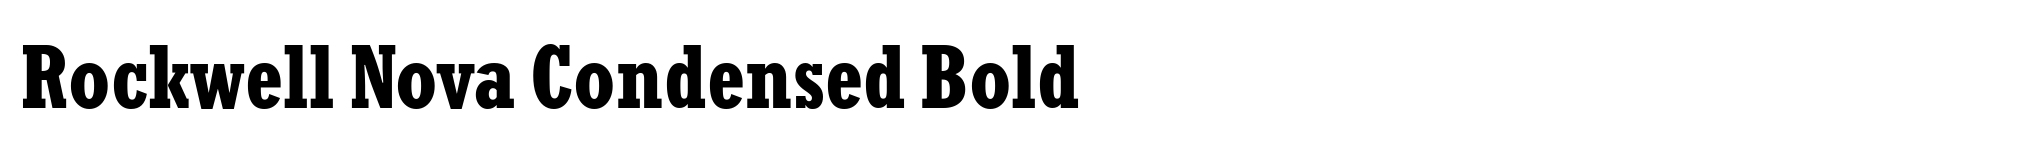 Rockwell Nova Condensed Bold image